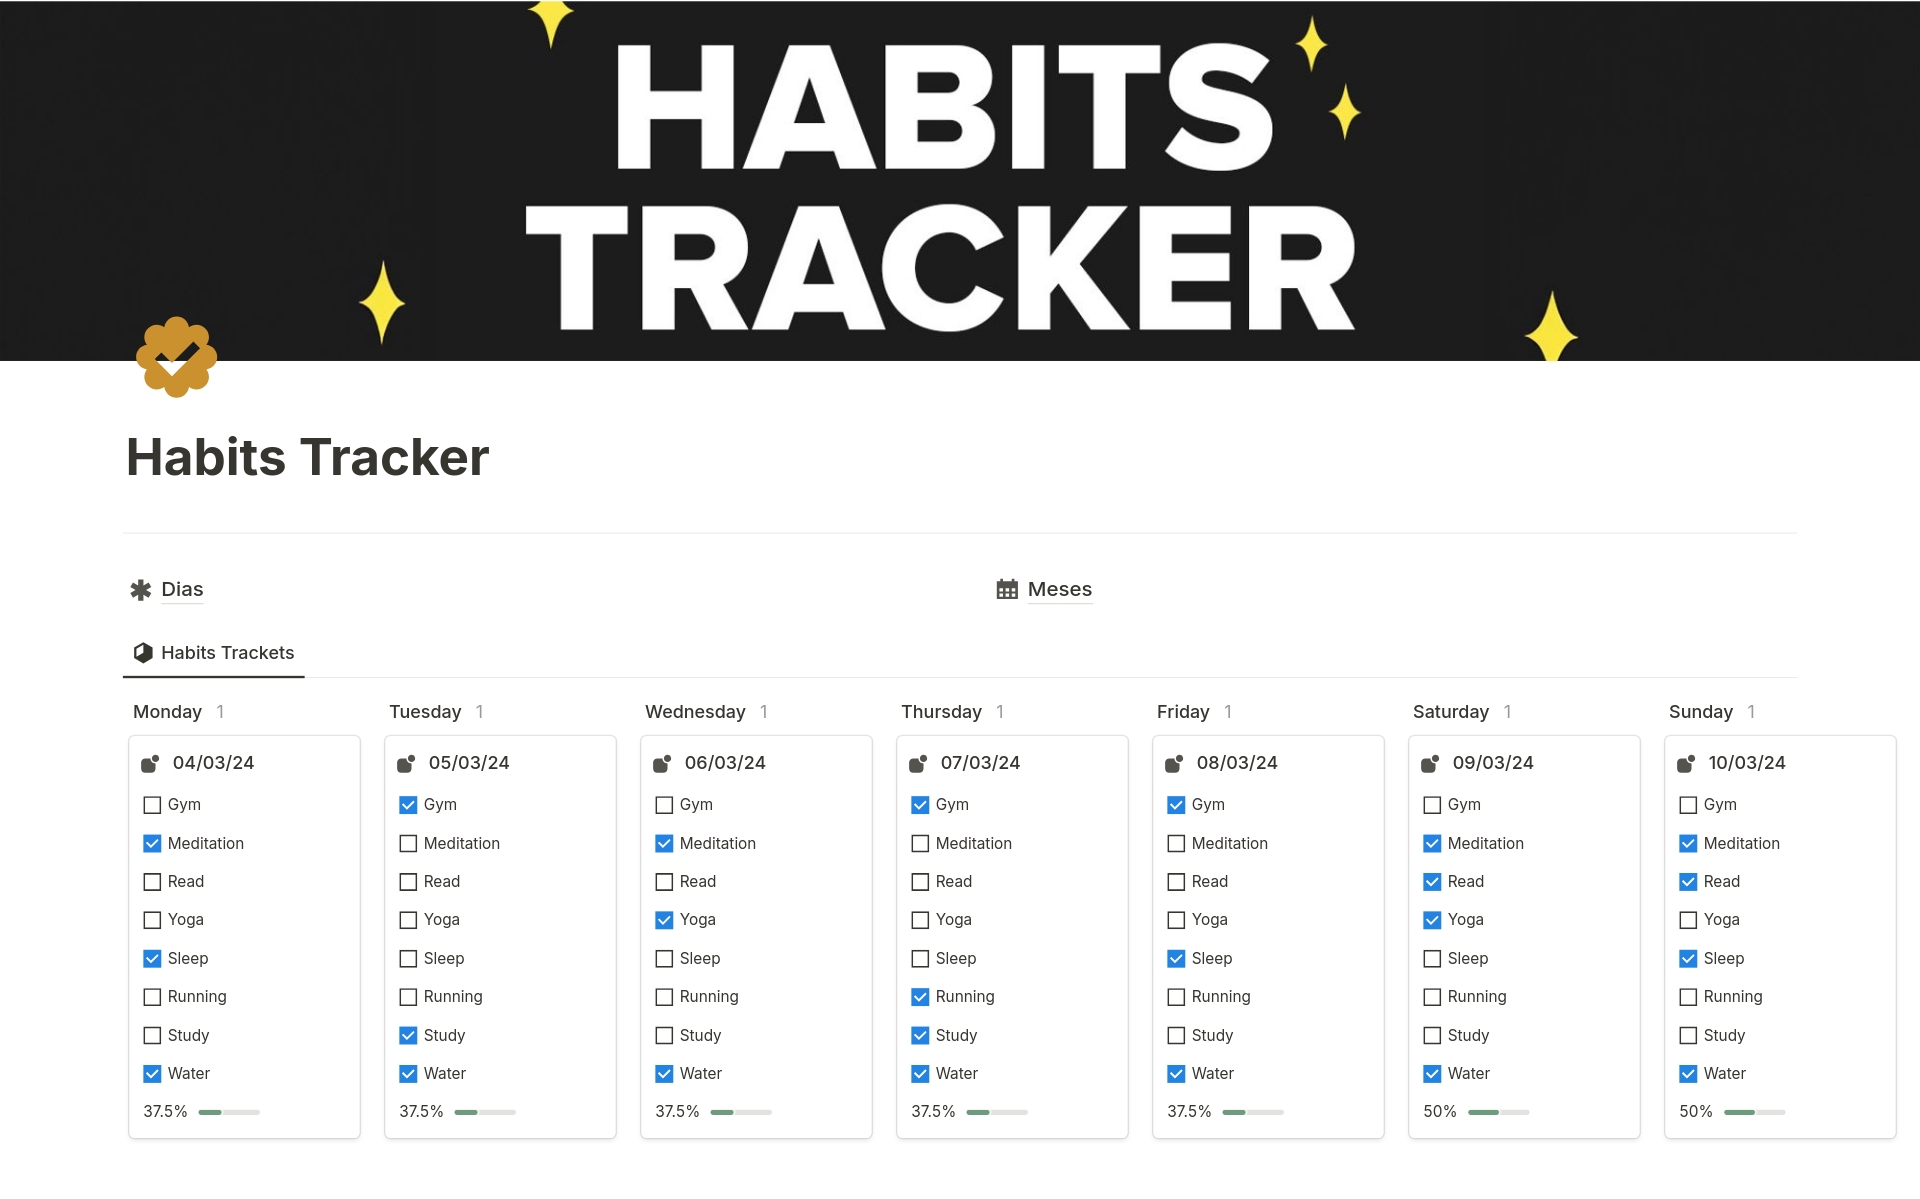 Vista previa de una plantilla para Habits Tracker